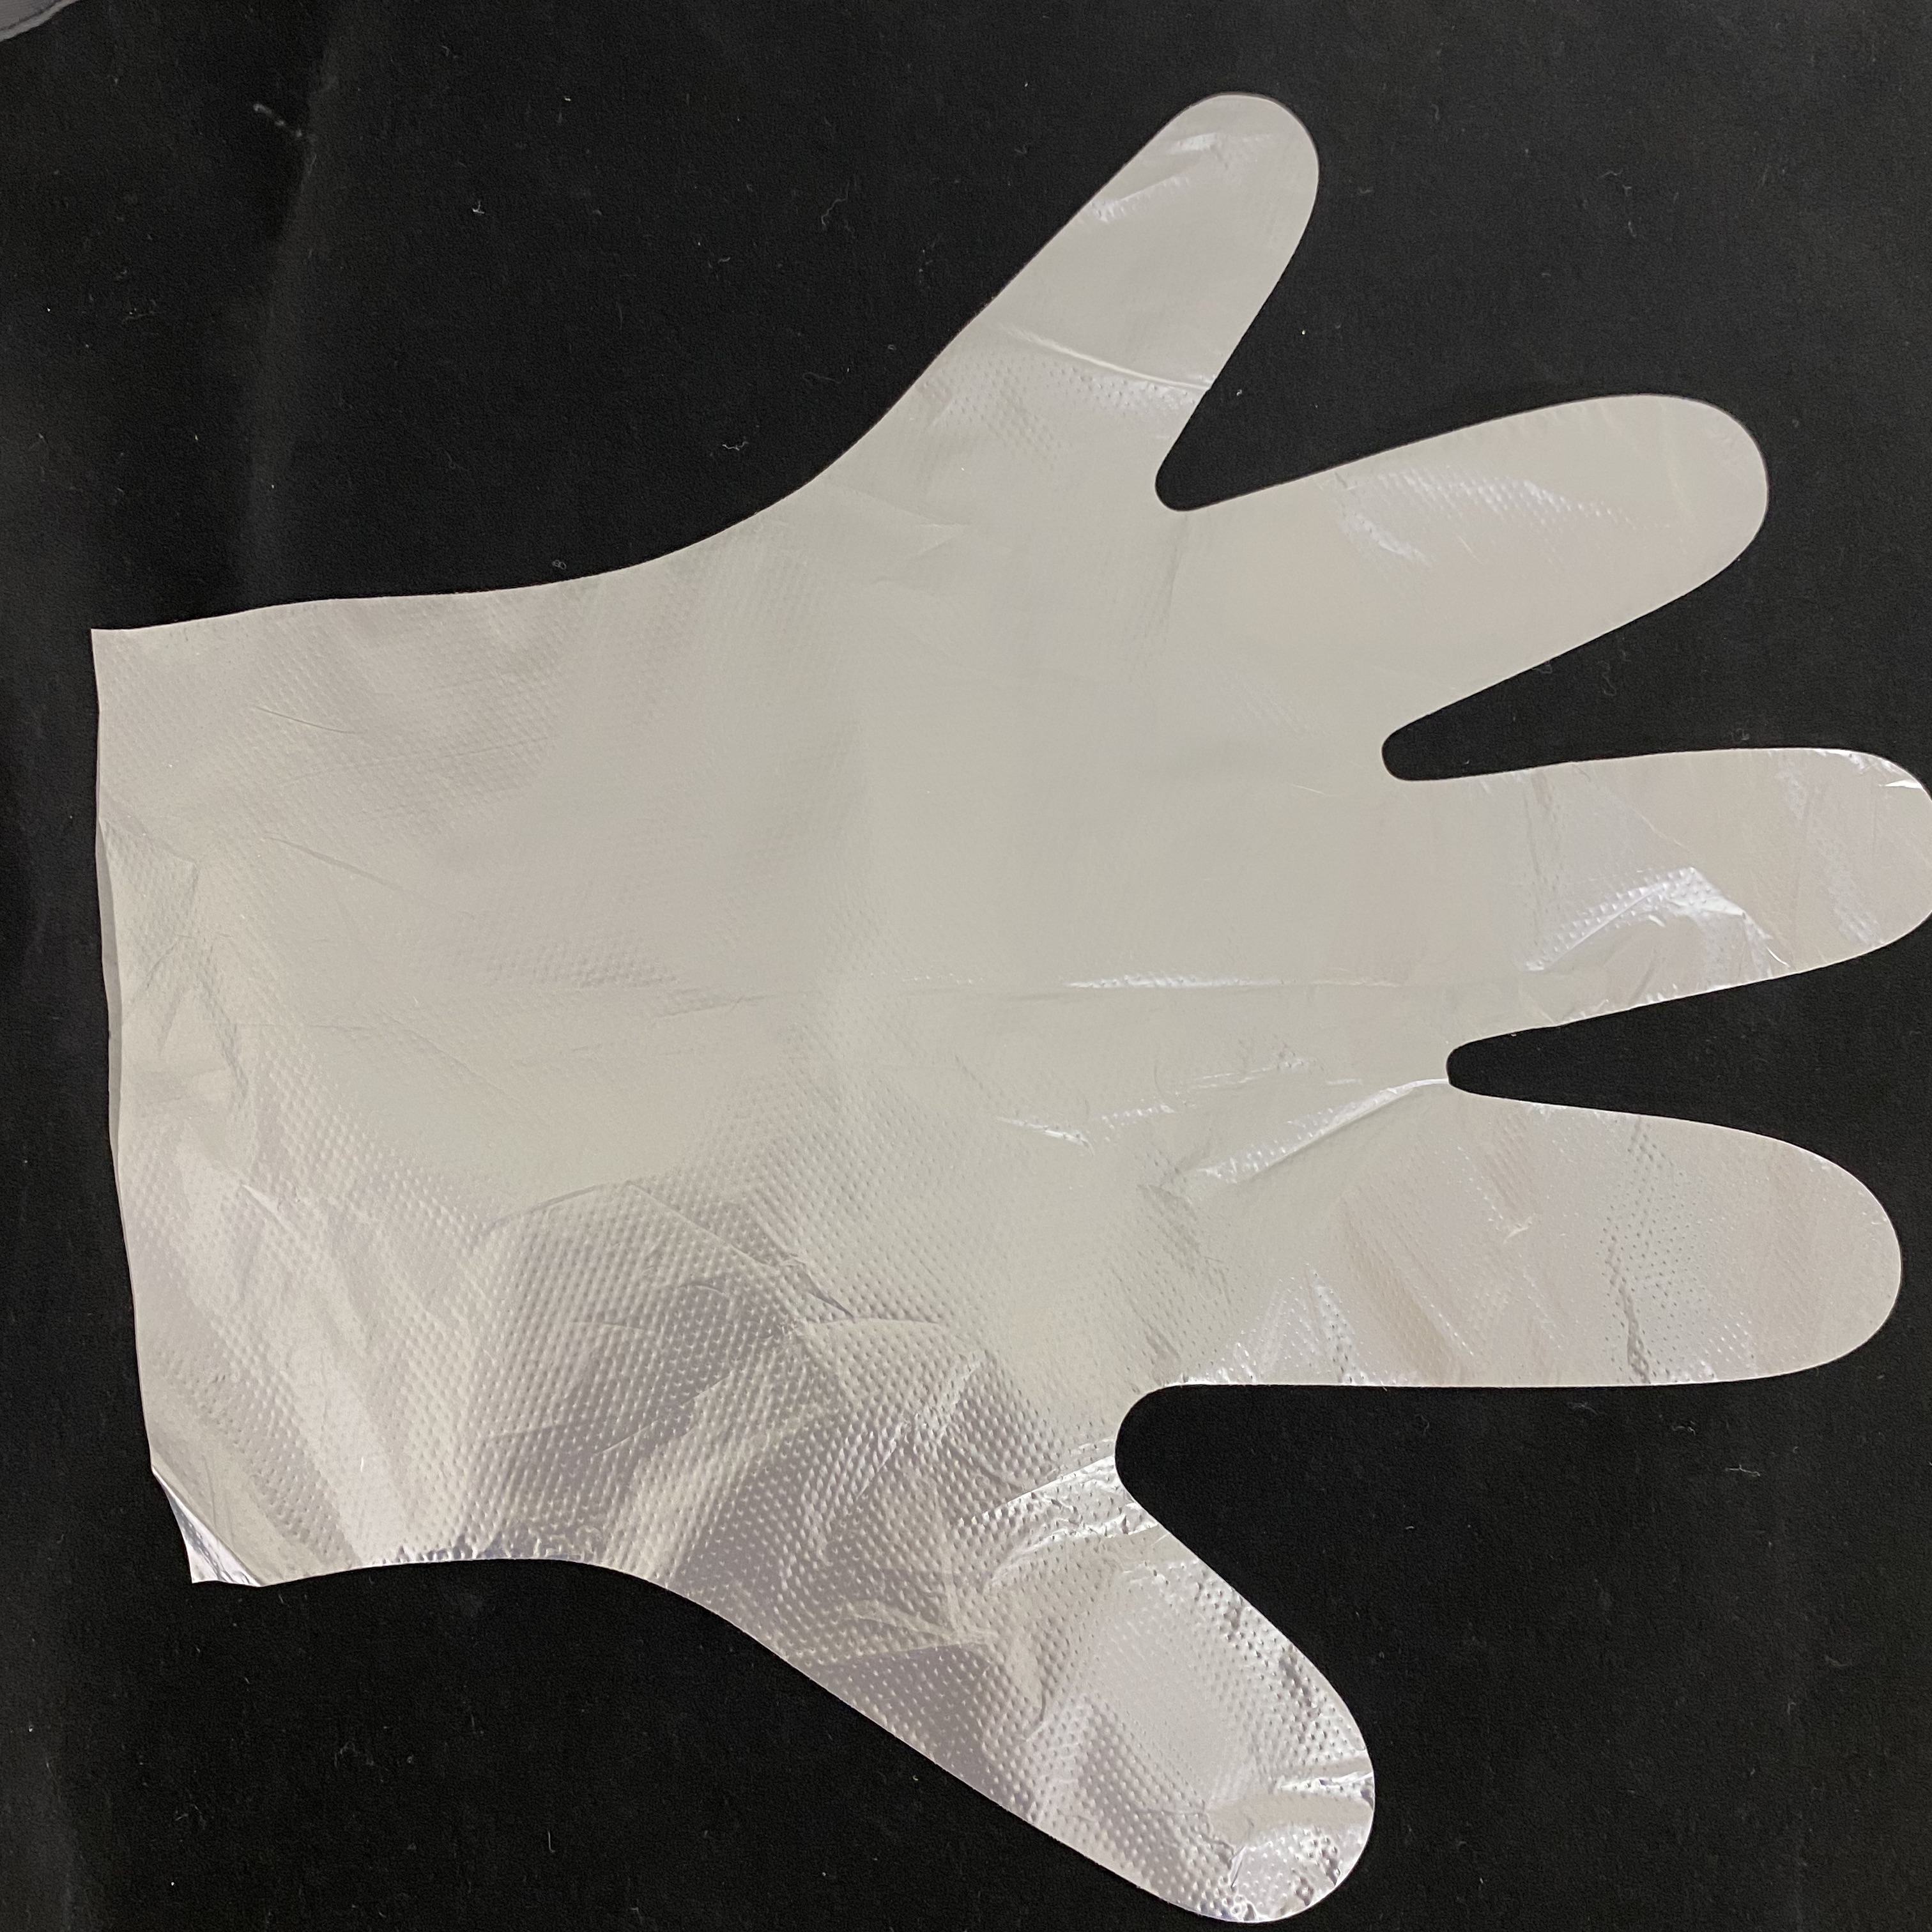 ＨＤポリエチレン 手袋 Ｆ 200枚 型押エンボス・半透明 食品衛生規格適合品 介護 調理 病院 食品用手袋 作業用手袋 使い切りタイプ フリーサイズ  | ｙパック